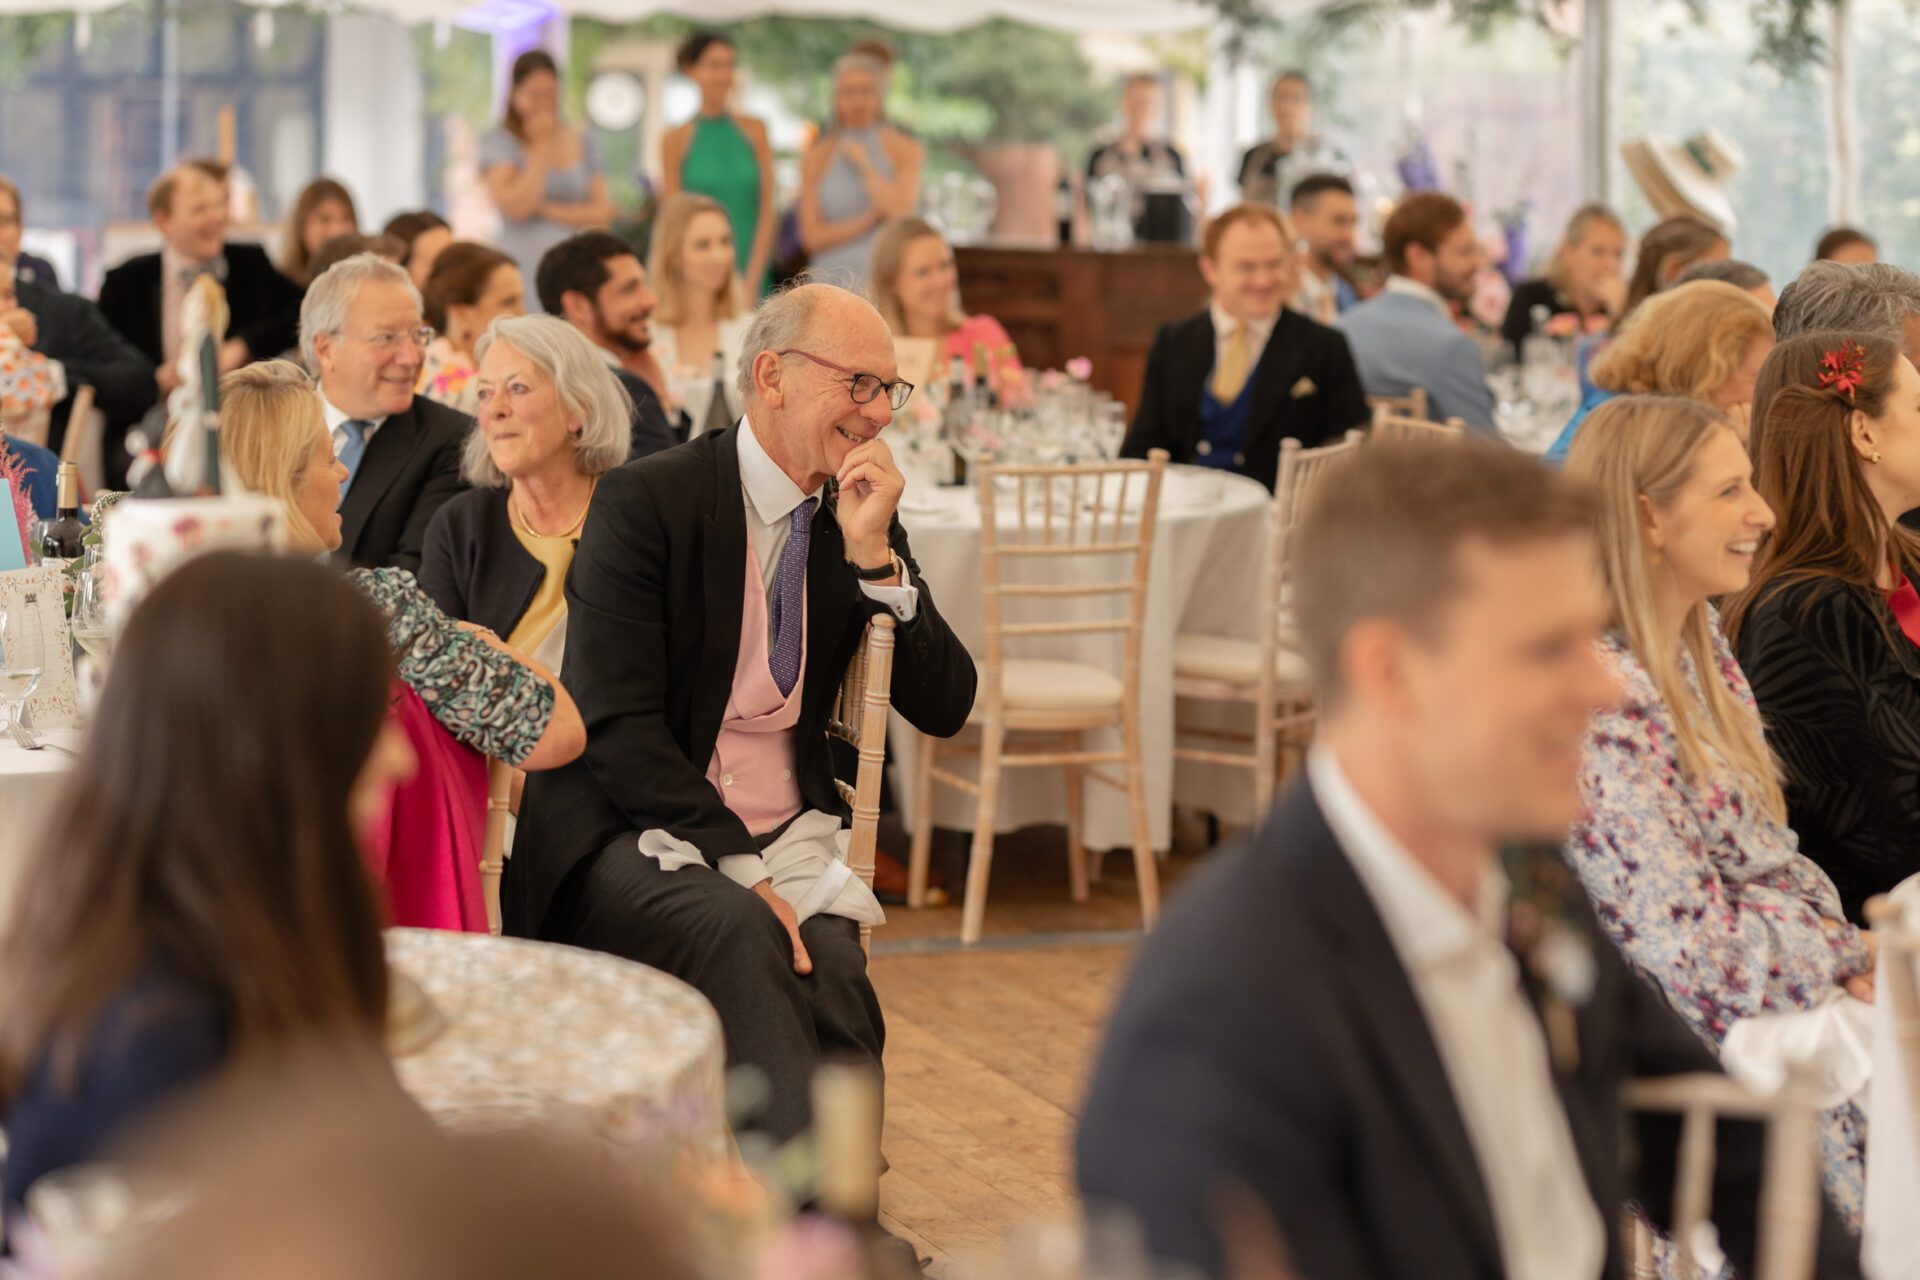 Wedding guests enjoy speeches at Kent wedding